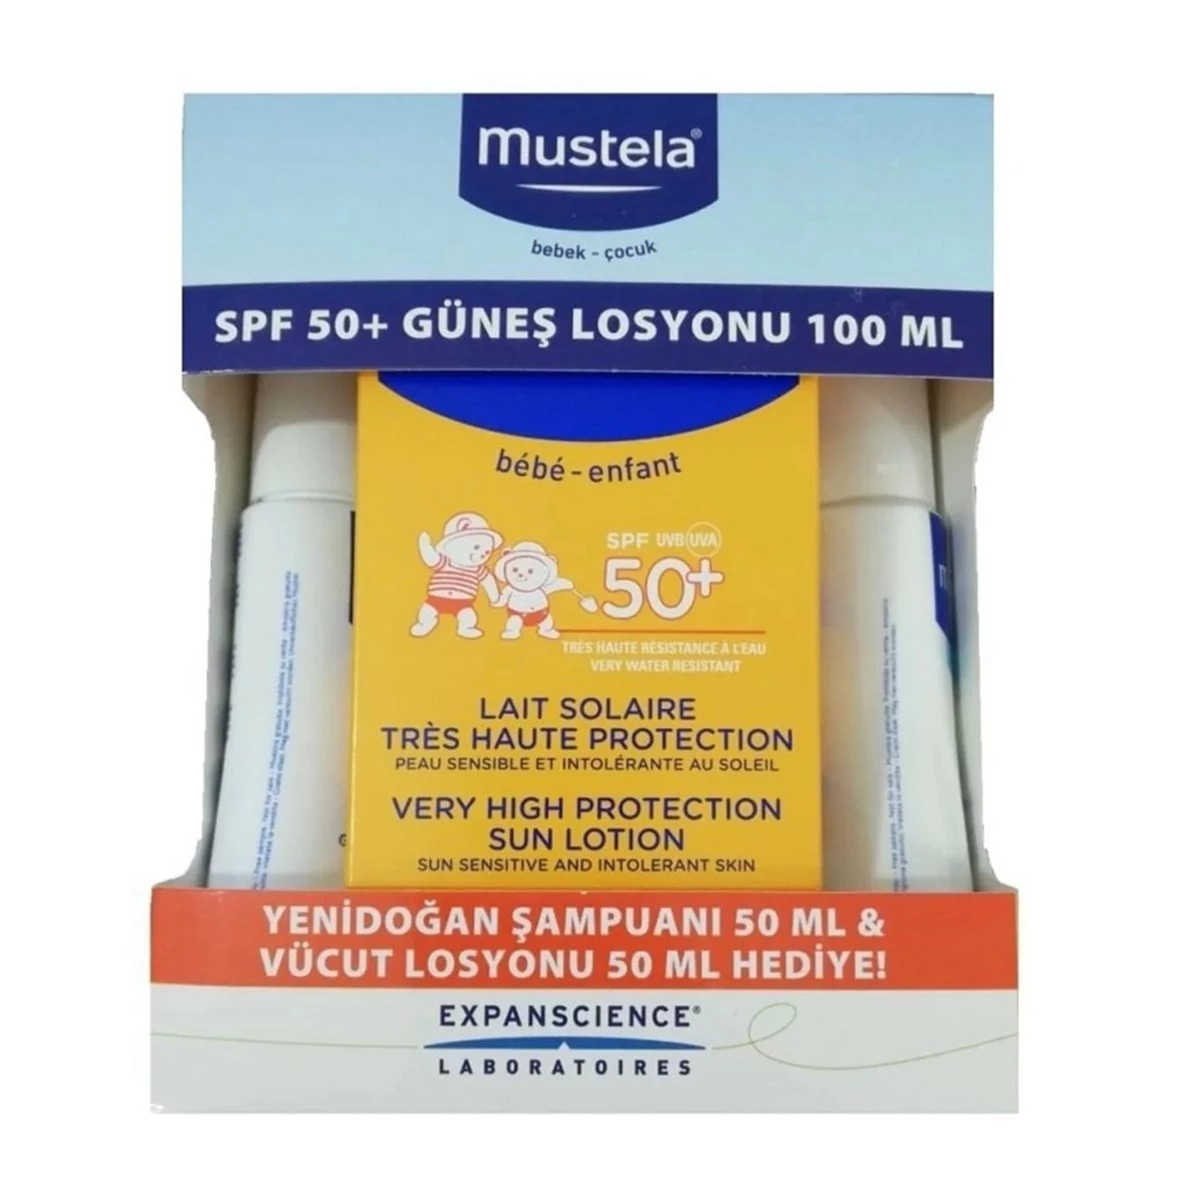 Mustela Güneş Losyonu SPF50 100 ml | Hydra Bebe + Dermo Cleansing 50 ml Hediyeli